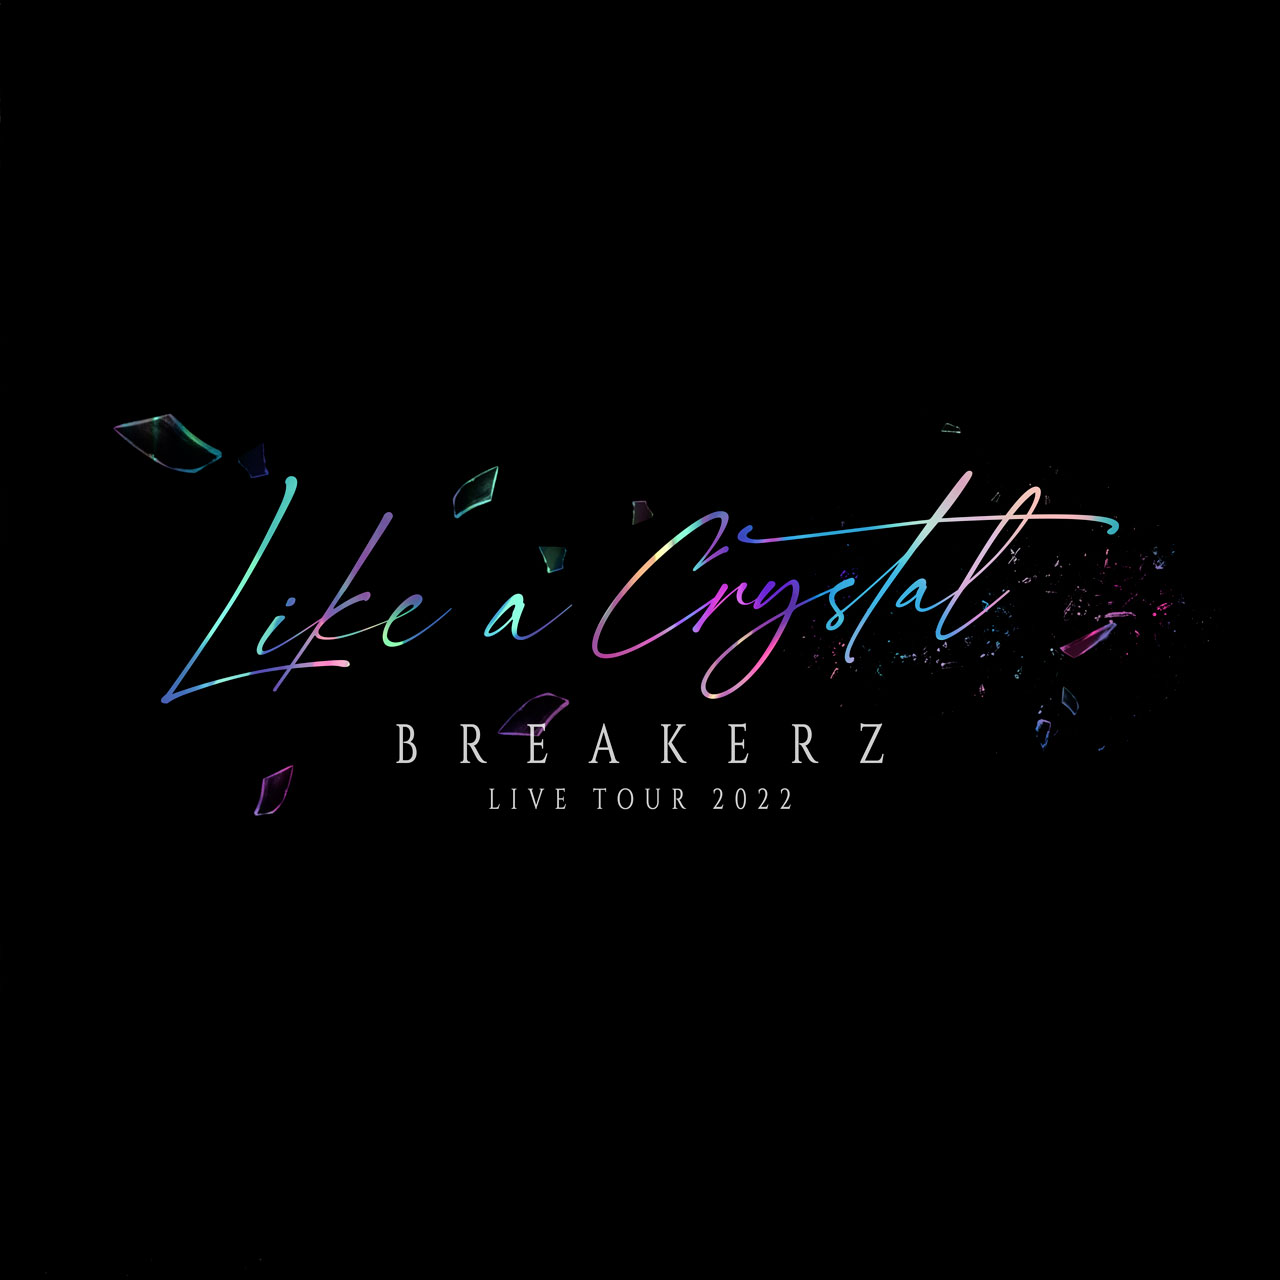 BREAKERZ LIVE TOUR 2022 -LIKE A CRYSTAL-